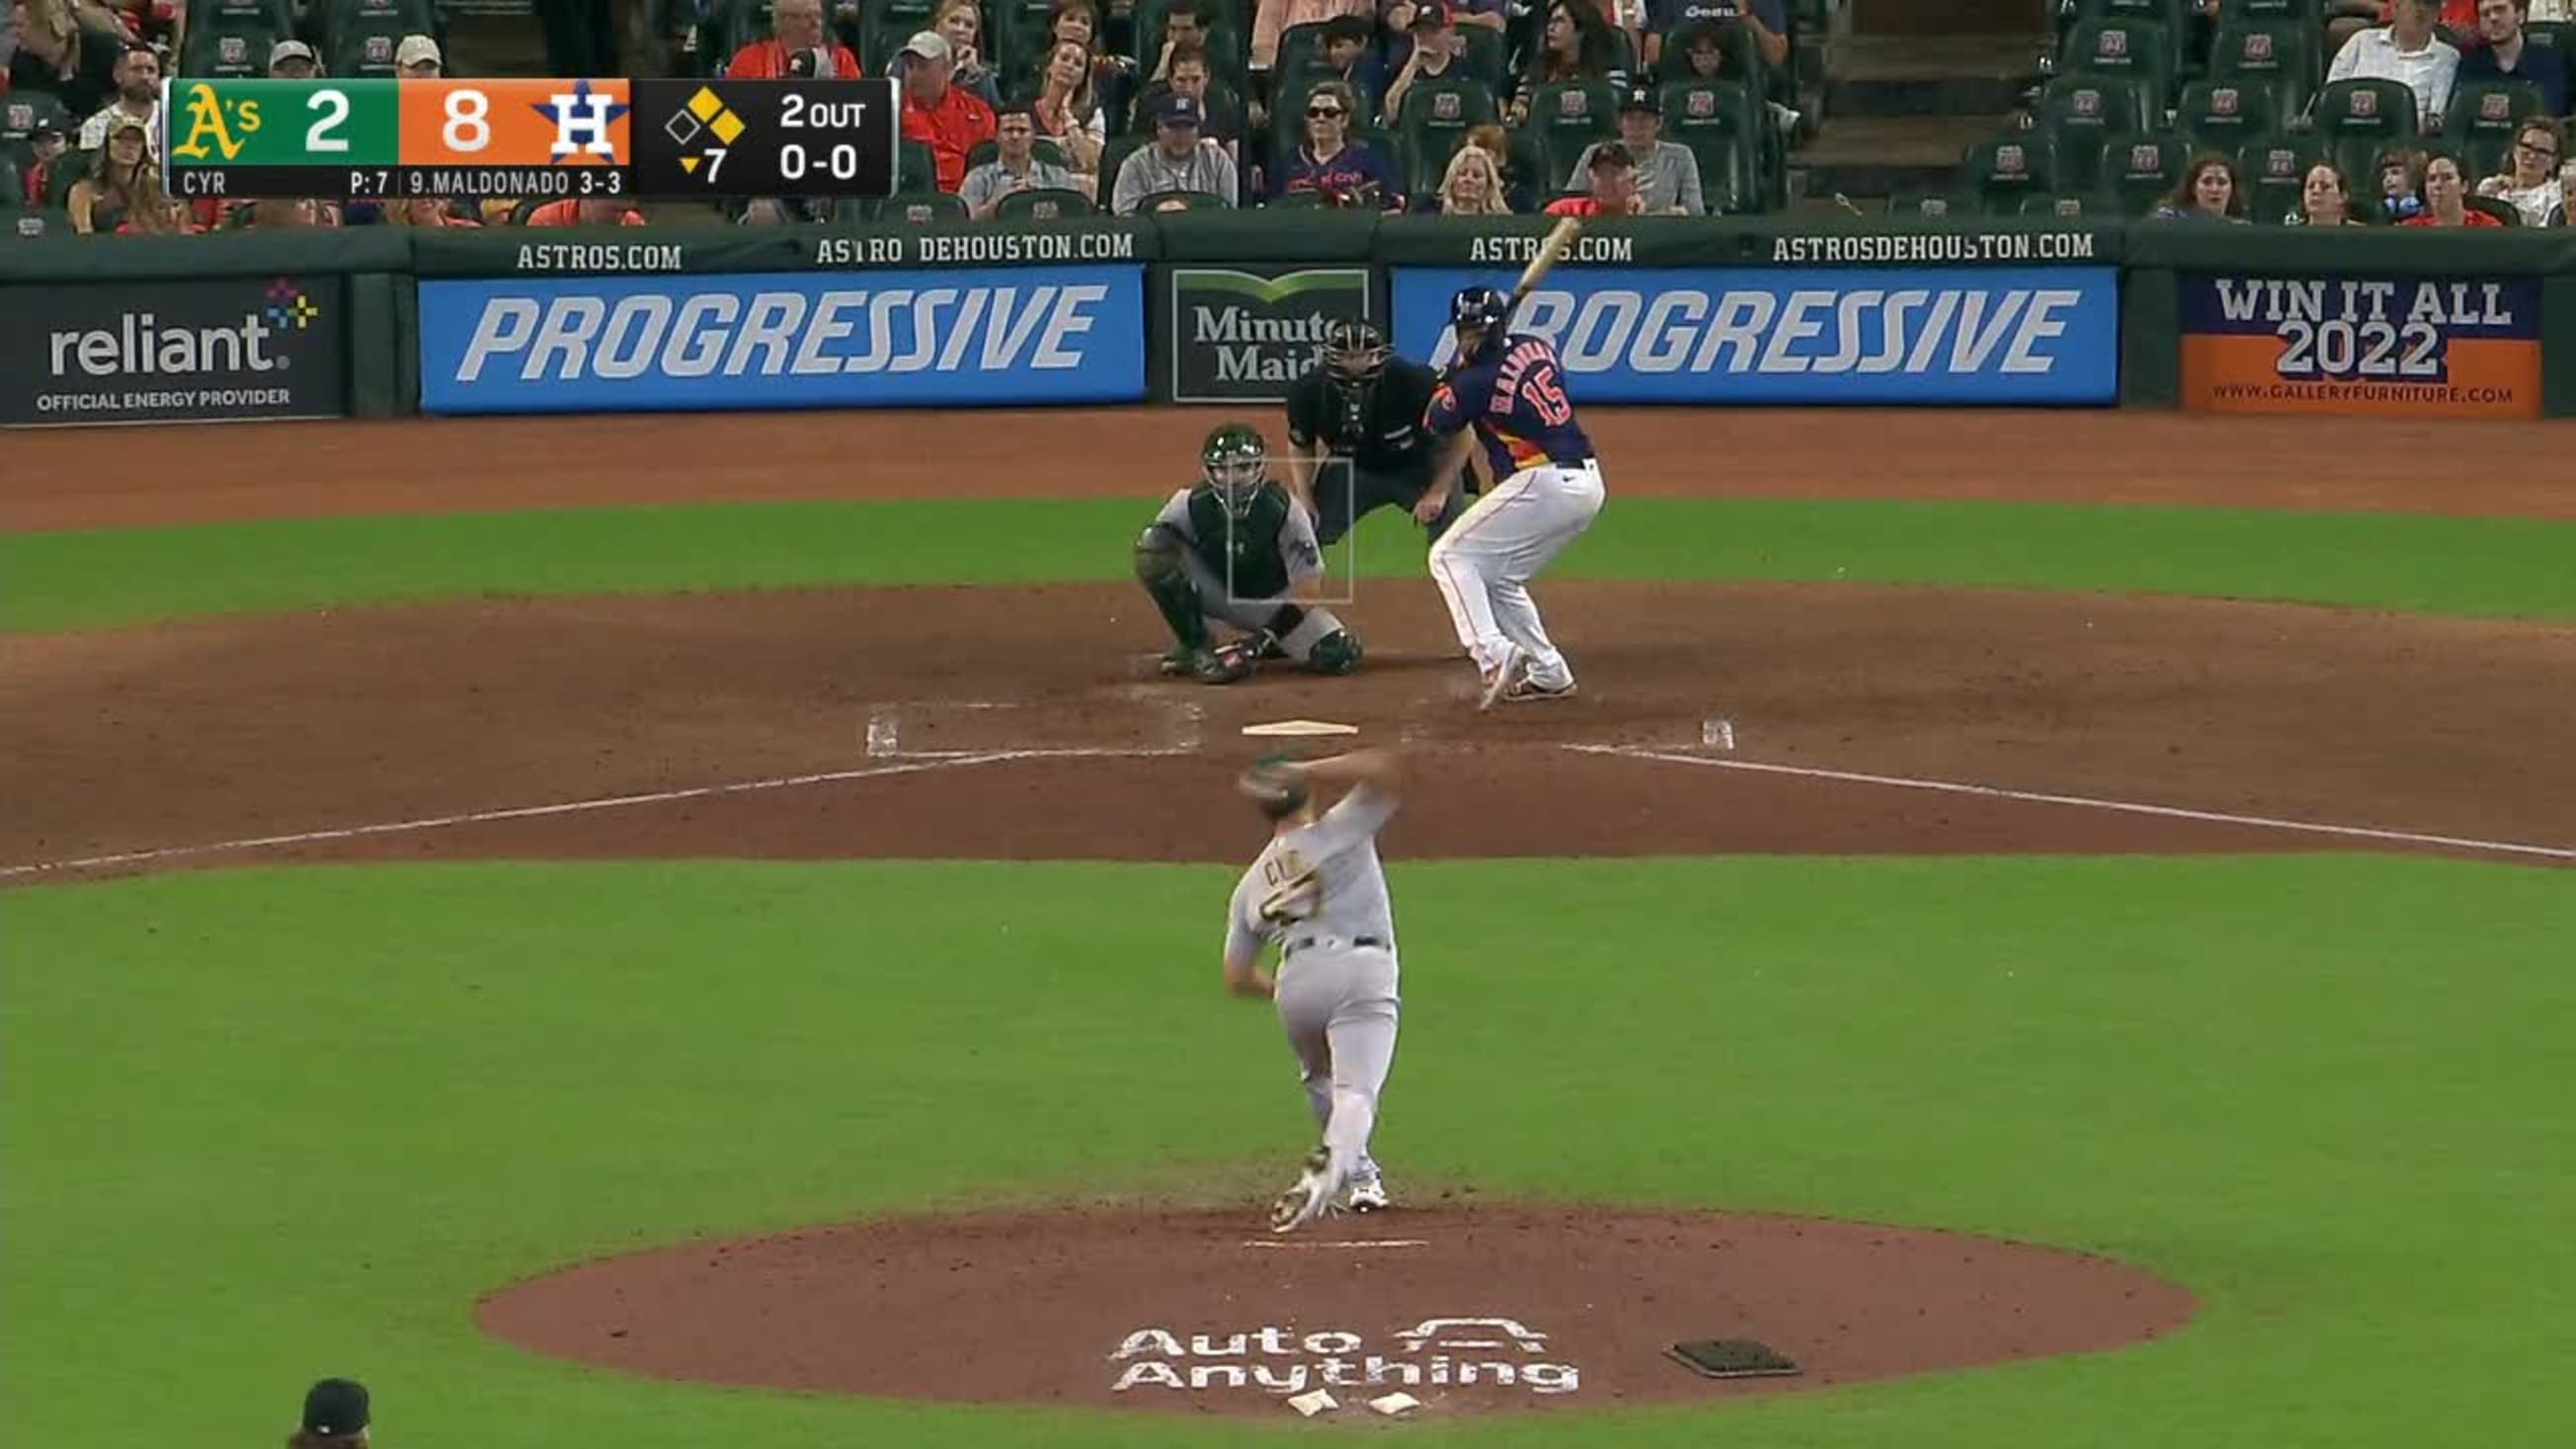 Martin Maldonado is really embracing the Astros colors 🤣